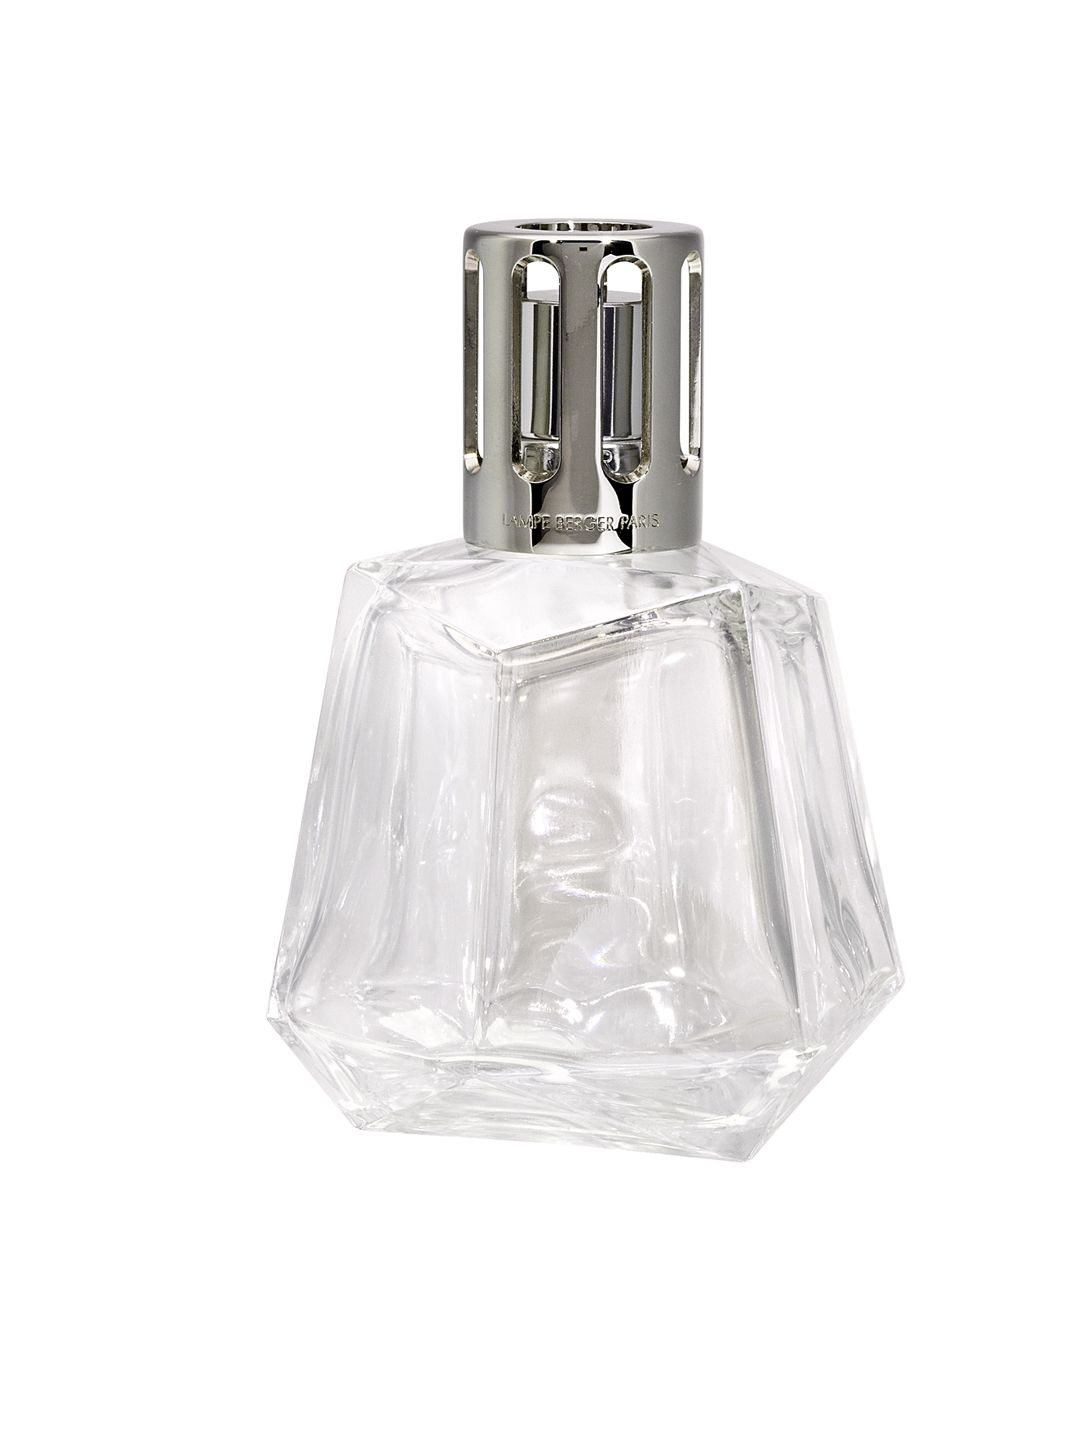 MAISON BERGER Transparent Glass Origami Transparente Aroma Oil Diffuser Price in India